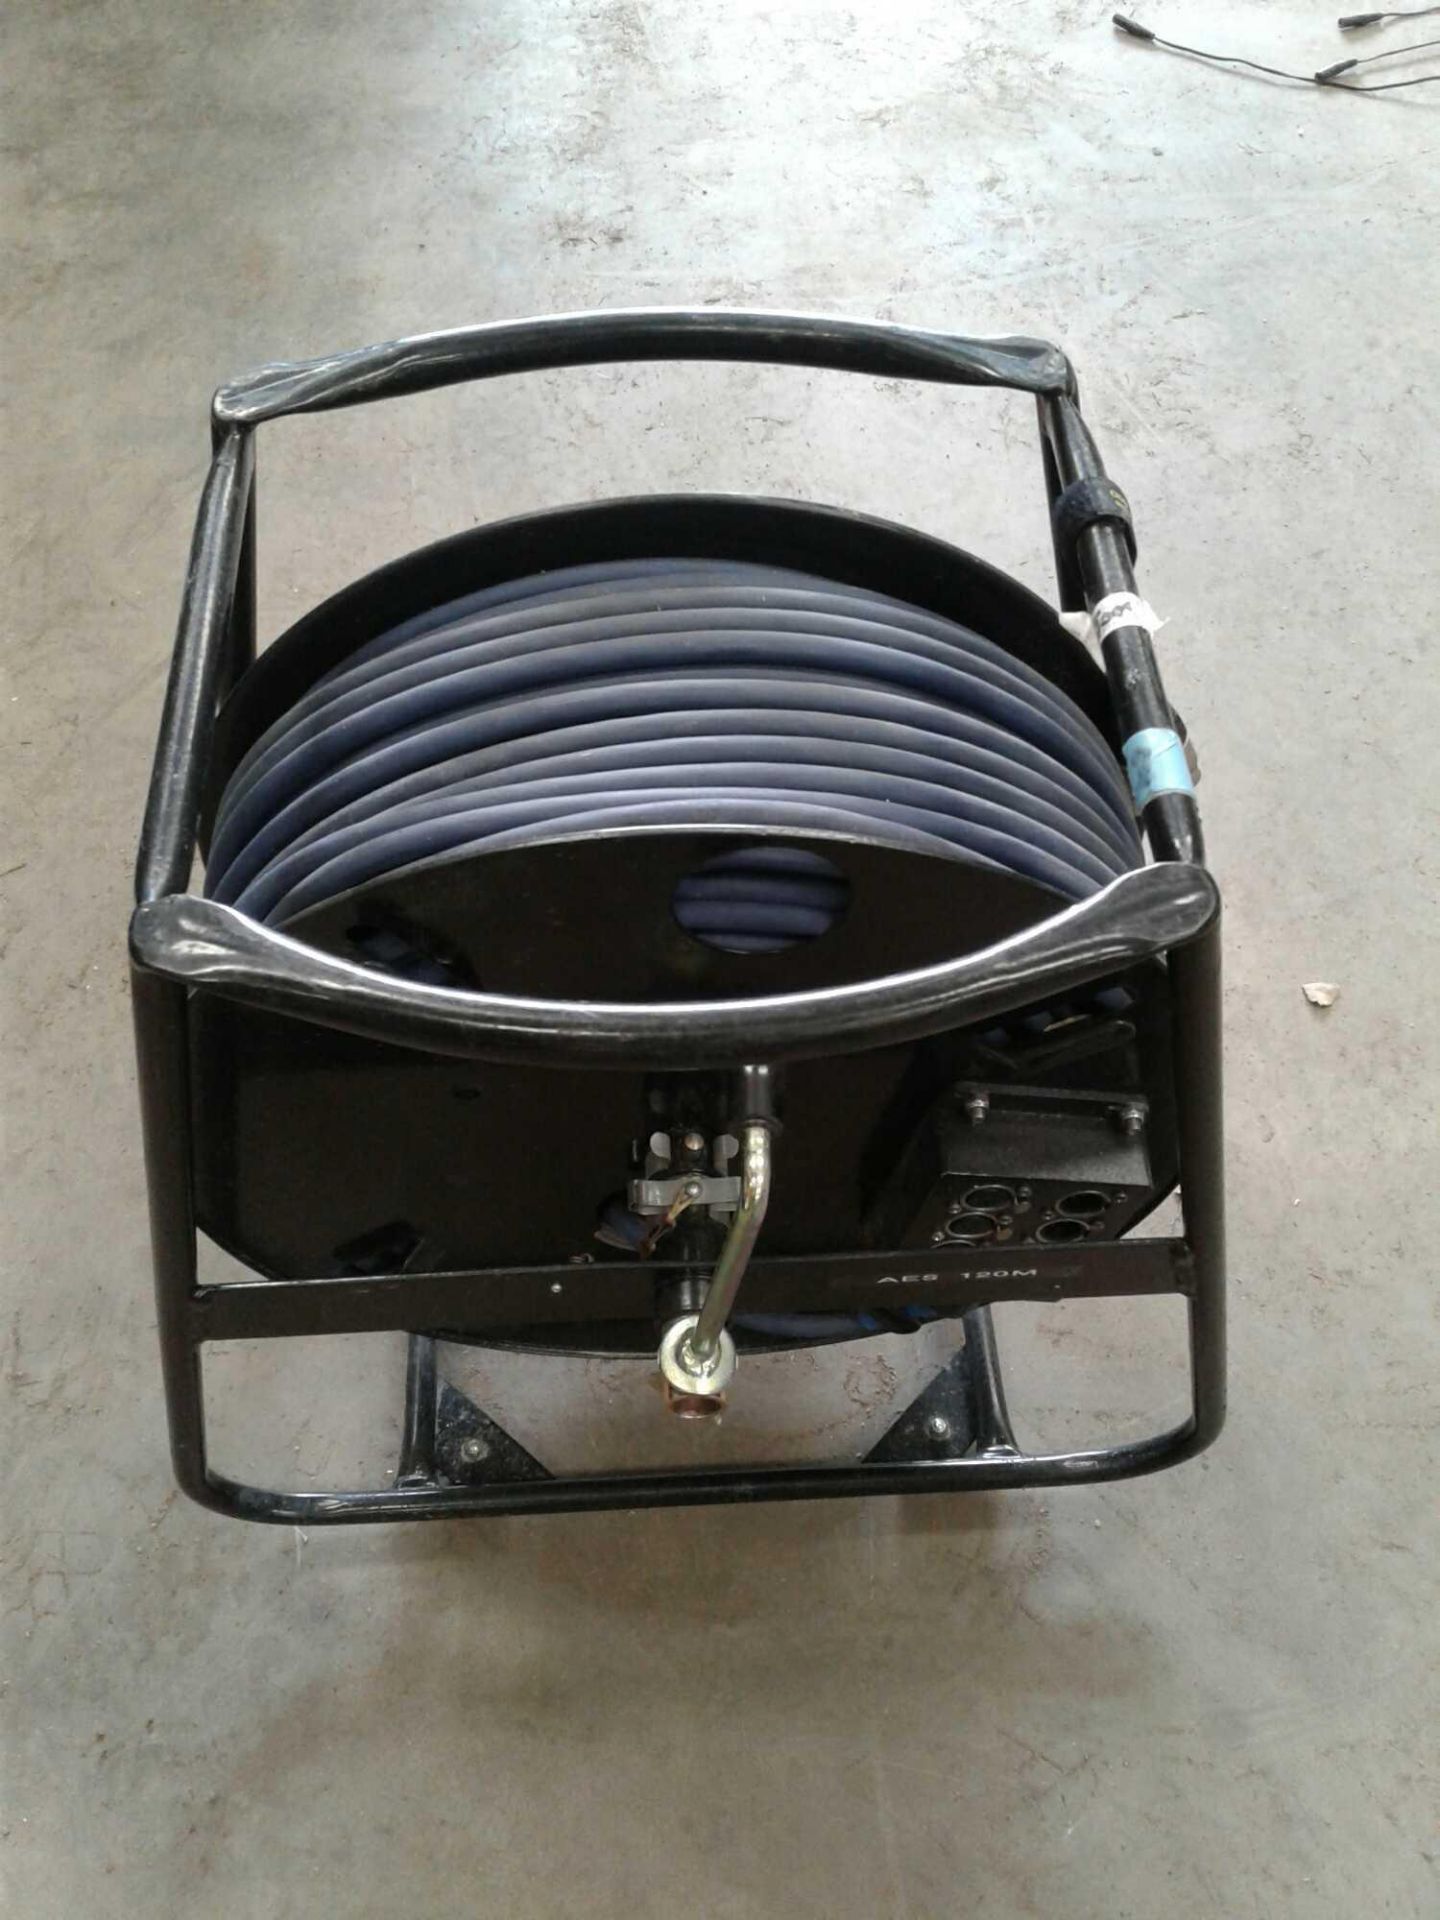 120 metre 12 core speaker wire on spool - Image 3 of 3